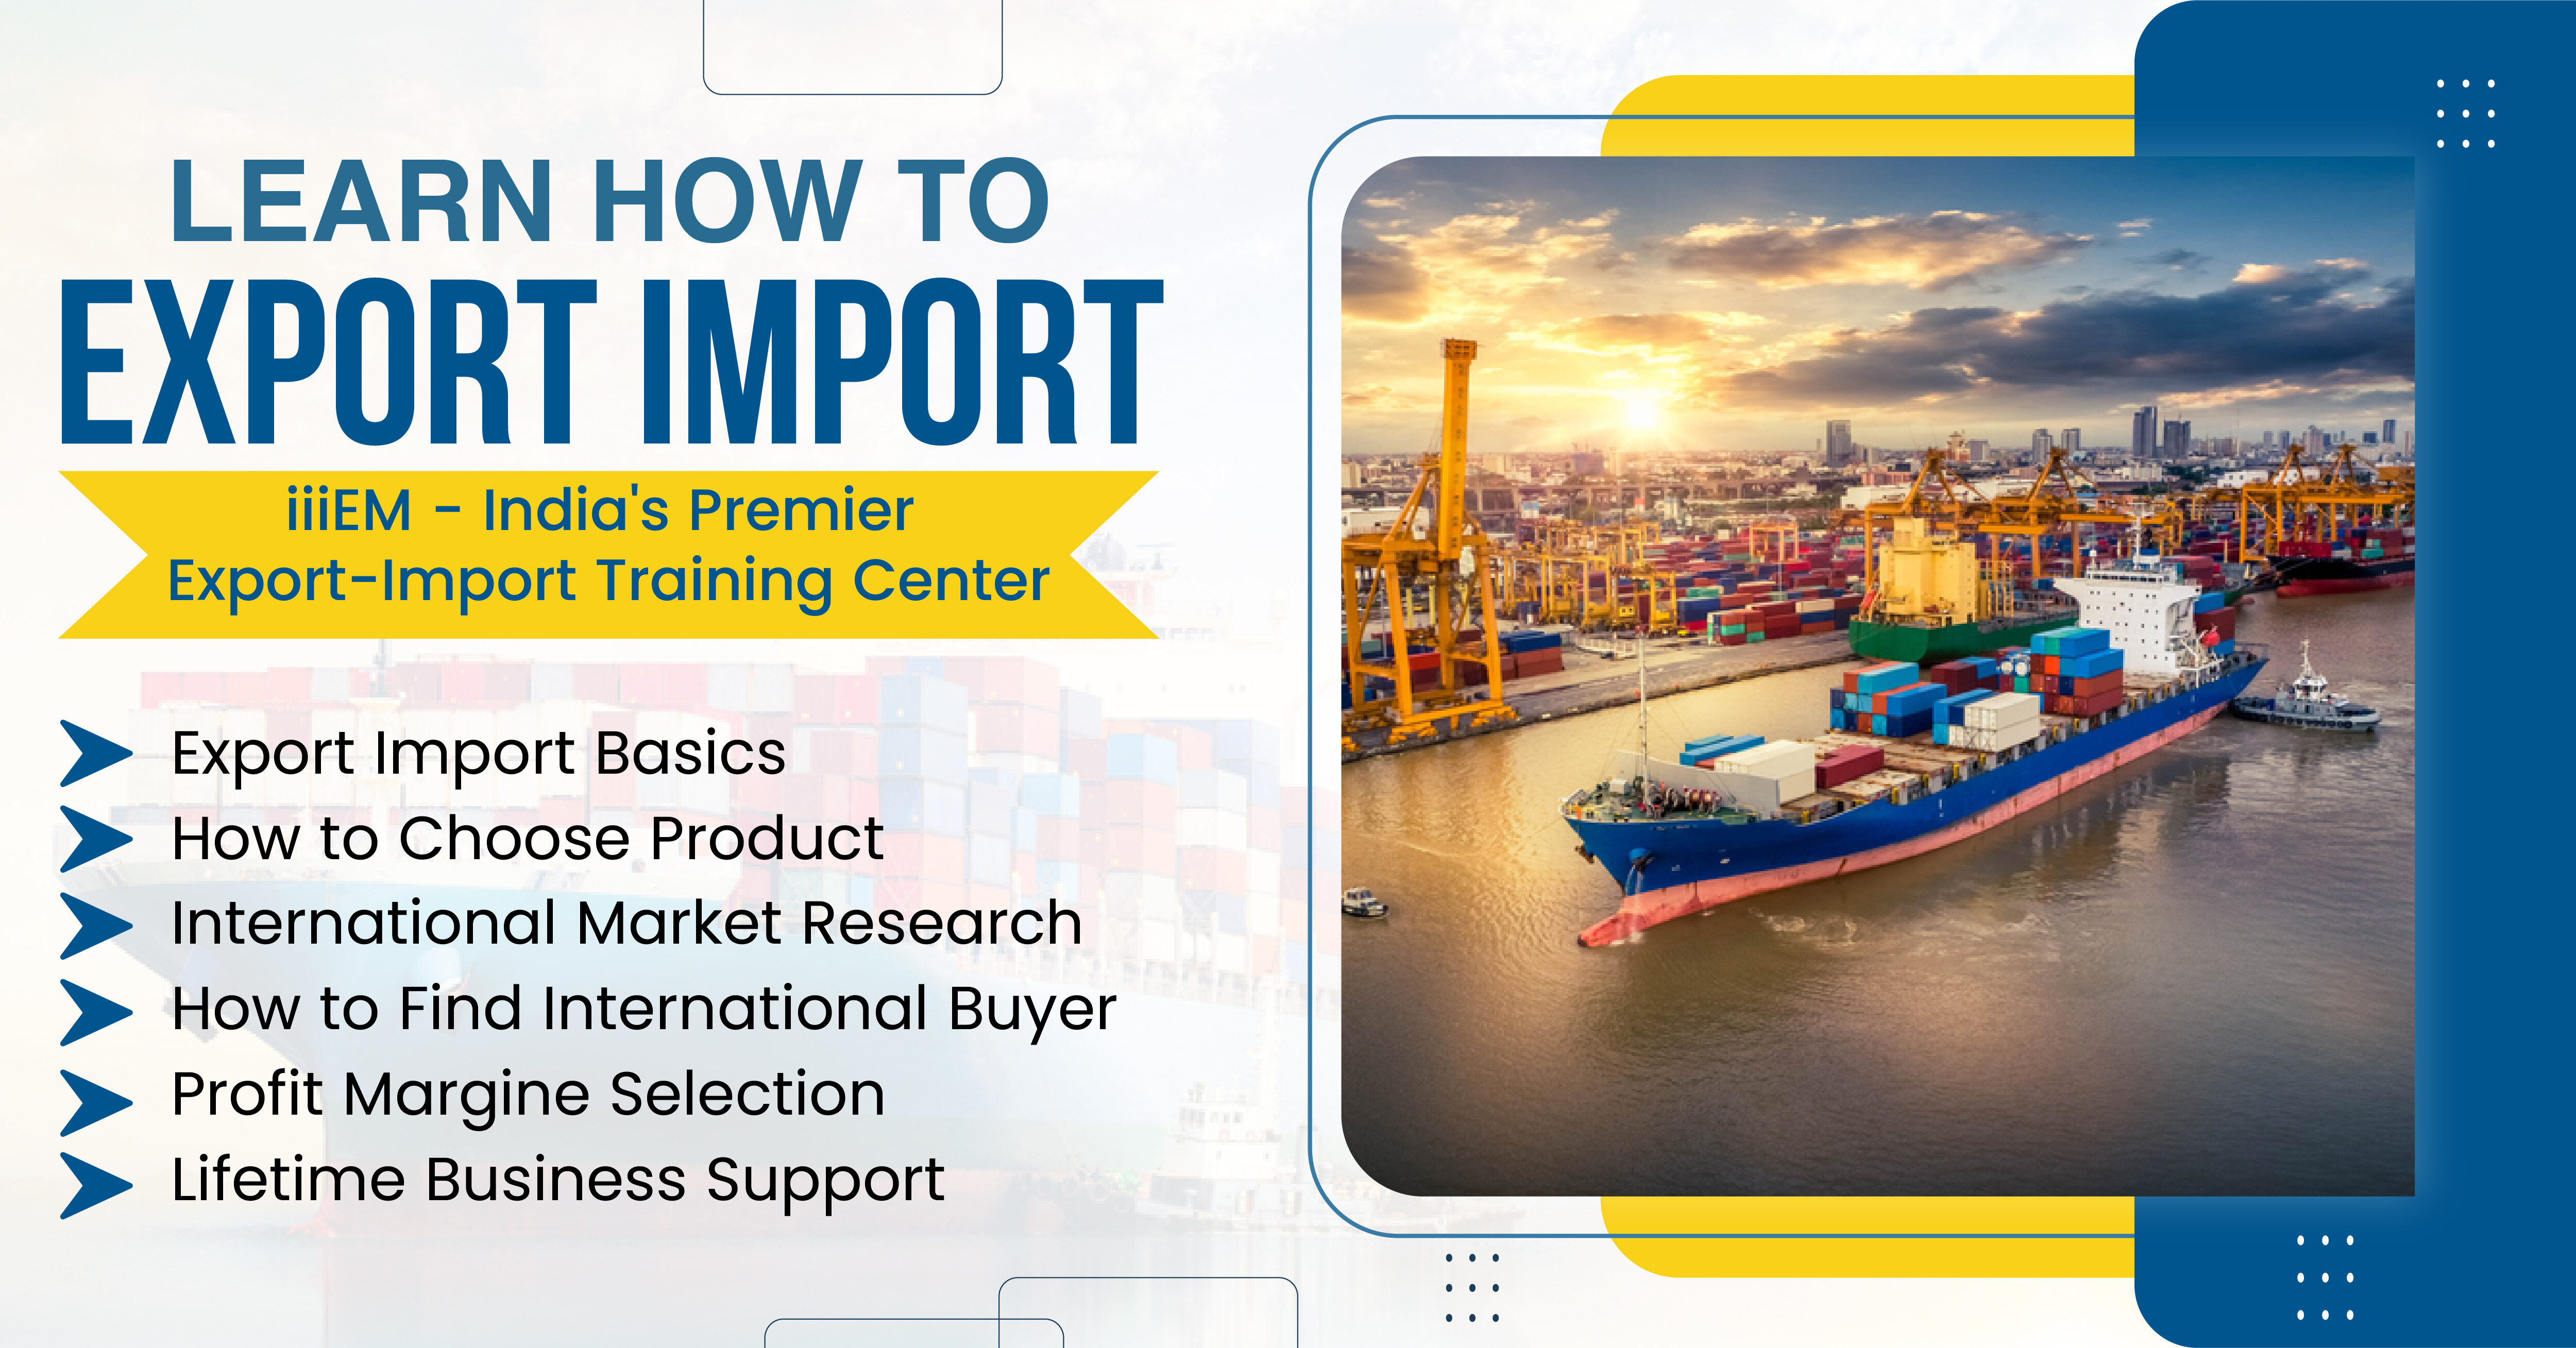 Certified Export Import Business Training in Hyderabad, Hyderabad, Andhra Pradesh, India